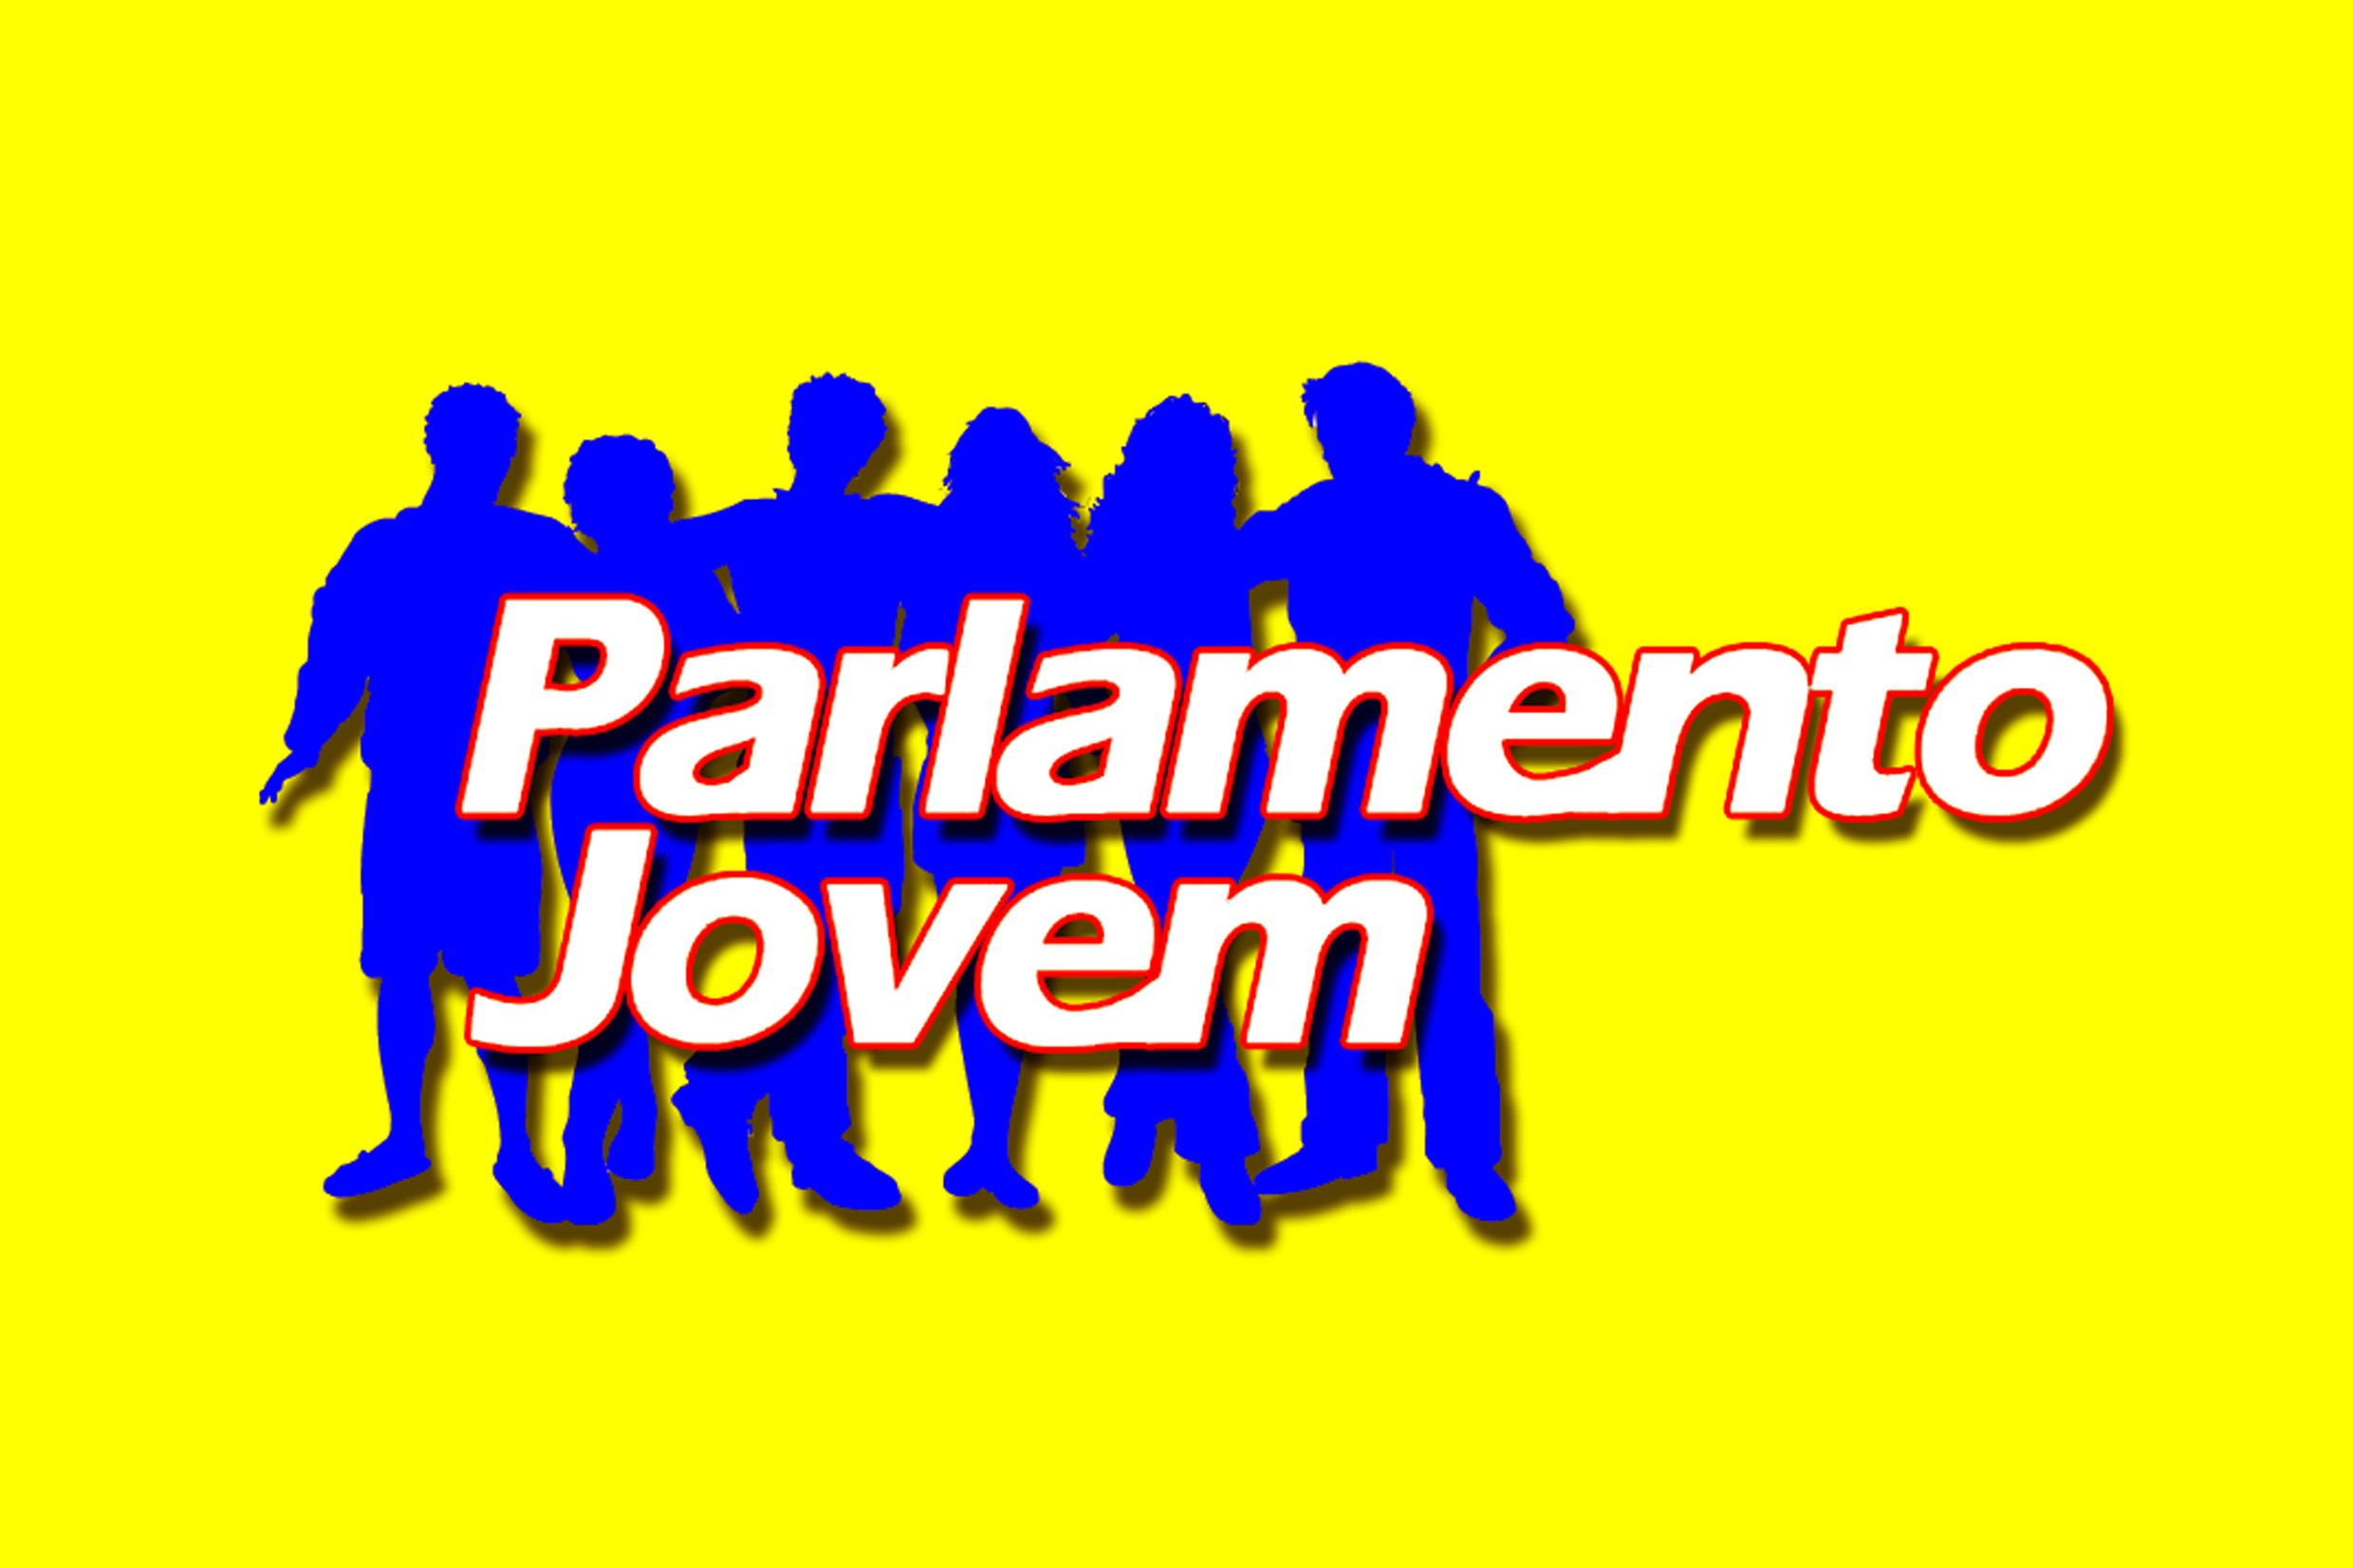 Parlamento Jovem <a style='float:right;color:#ccc' href='https://www3.al.sp.gov.br/repositorio/noticia/N-12-2016/fg198029.jpg' target=_blank><i class='bi bi-zoom-in'></i> Clique para ver a imagem </a>